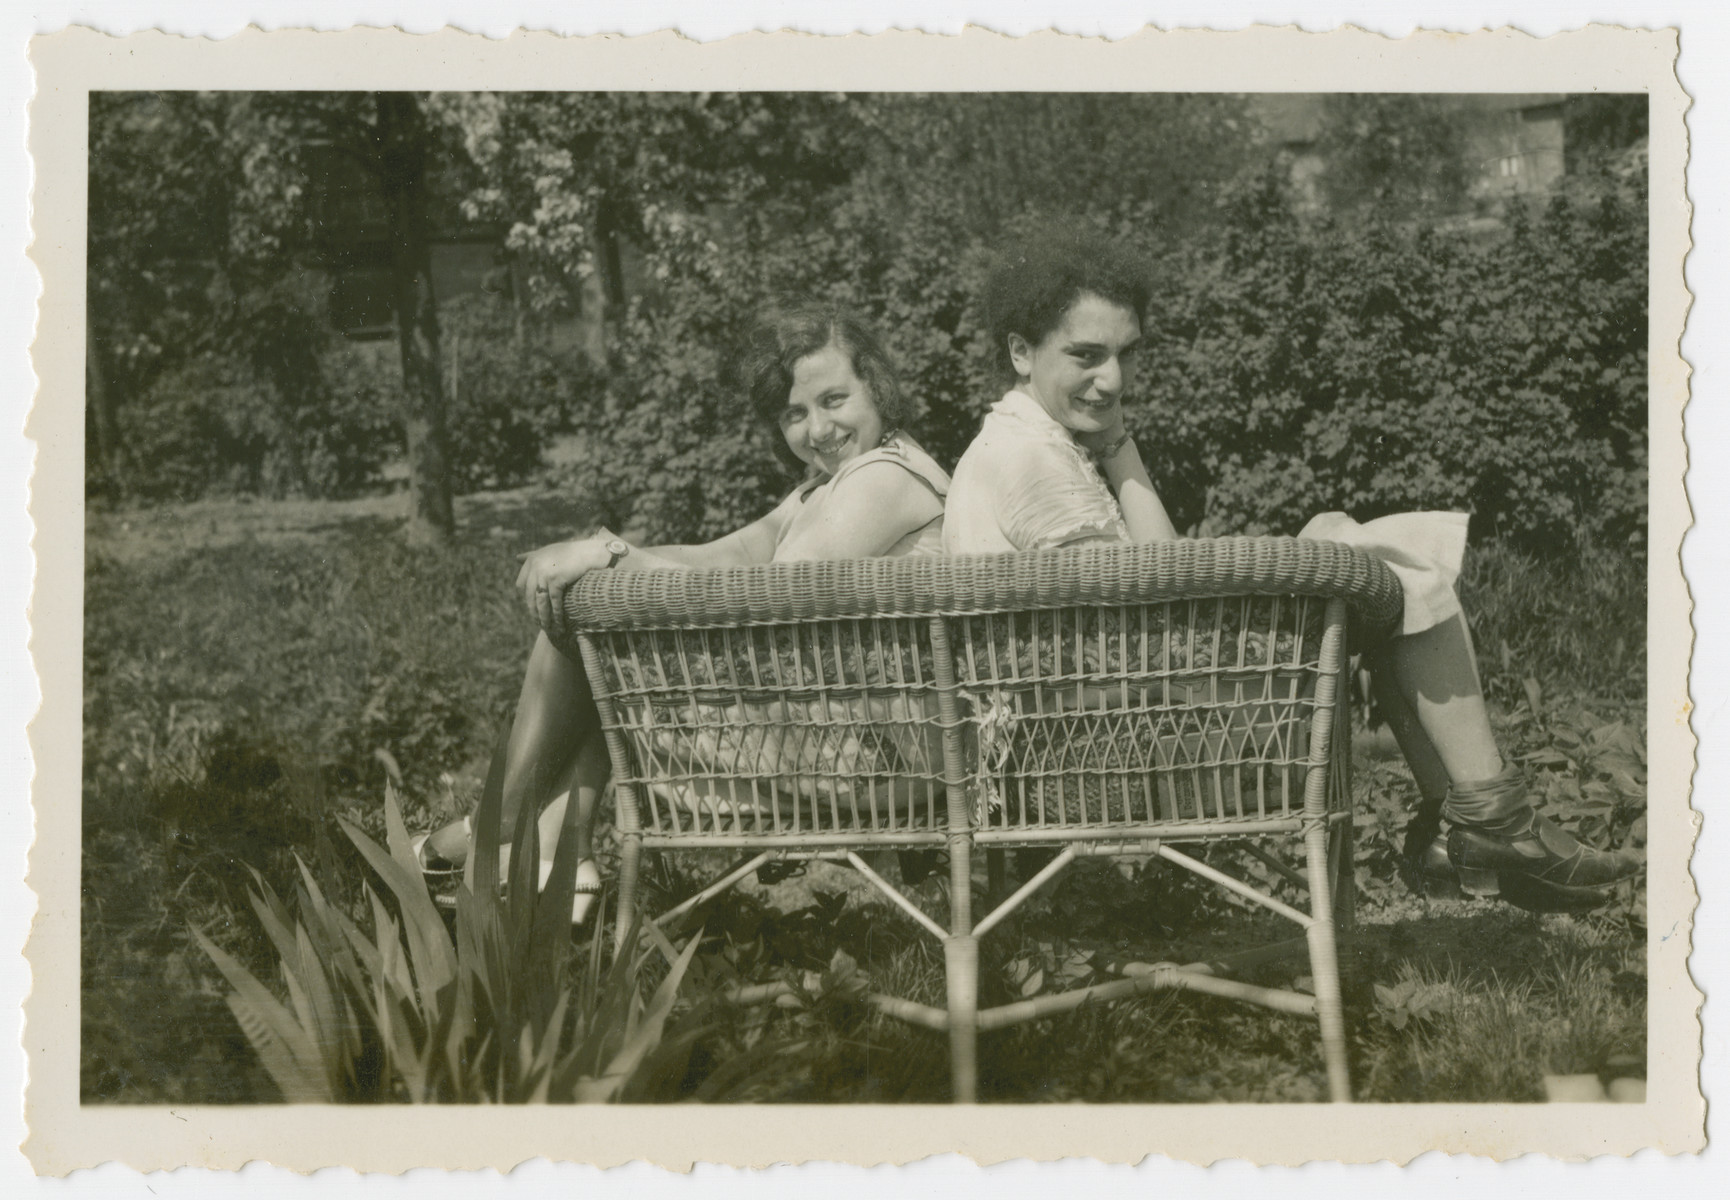 Two young women sunbathe in a garden.

Edith Kleeblatt is pictured on the left.